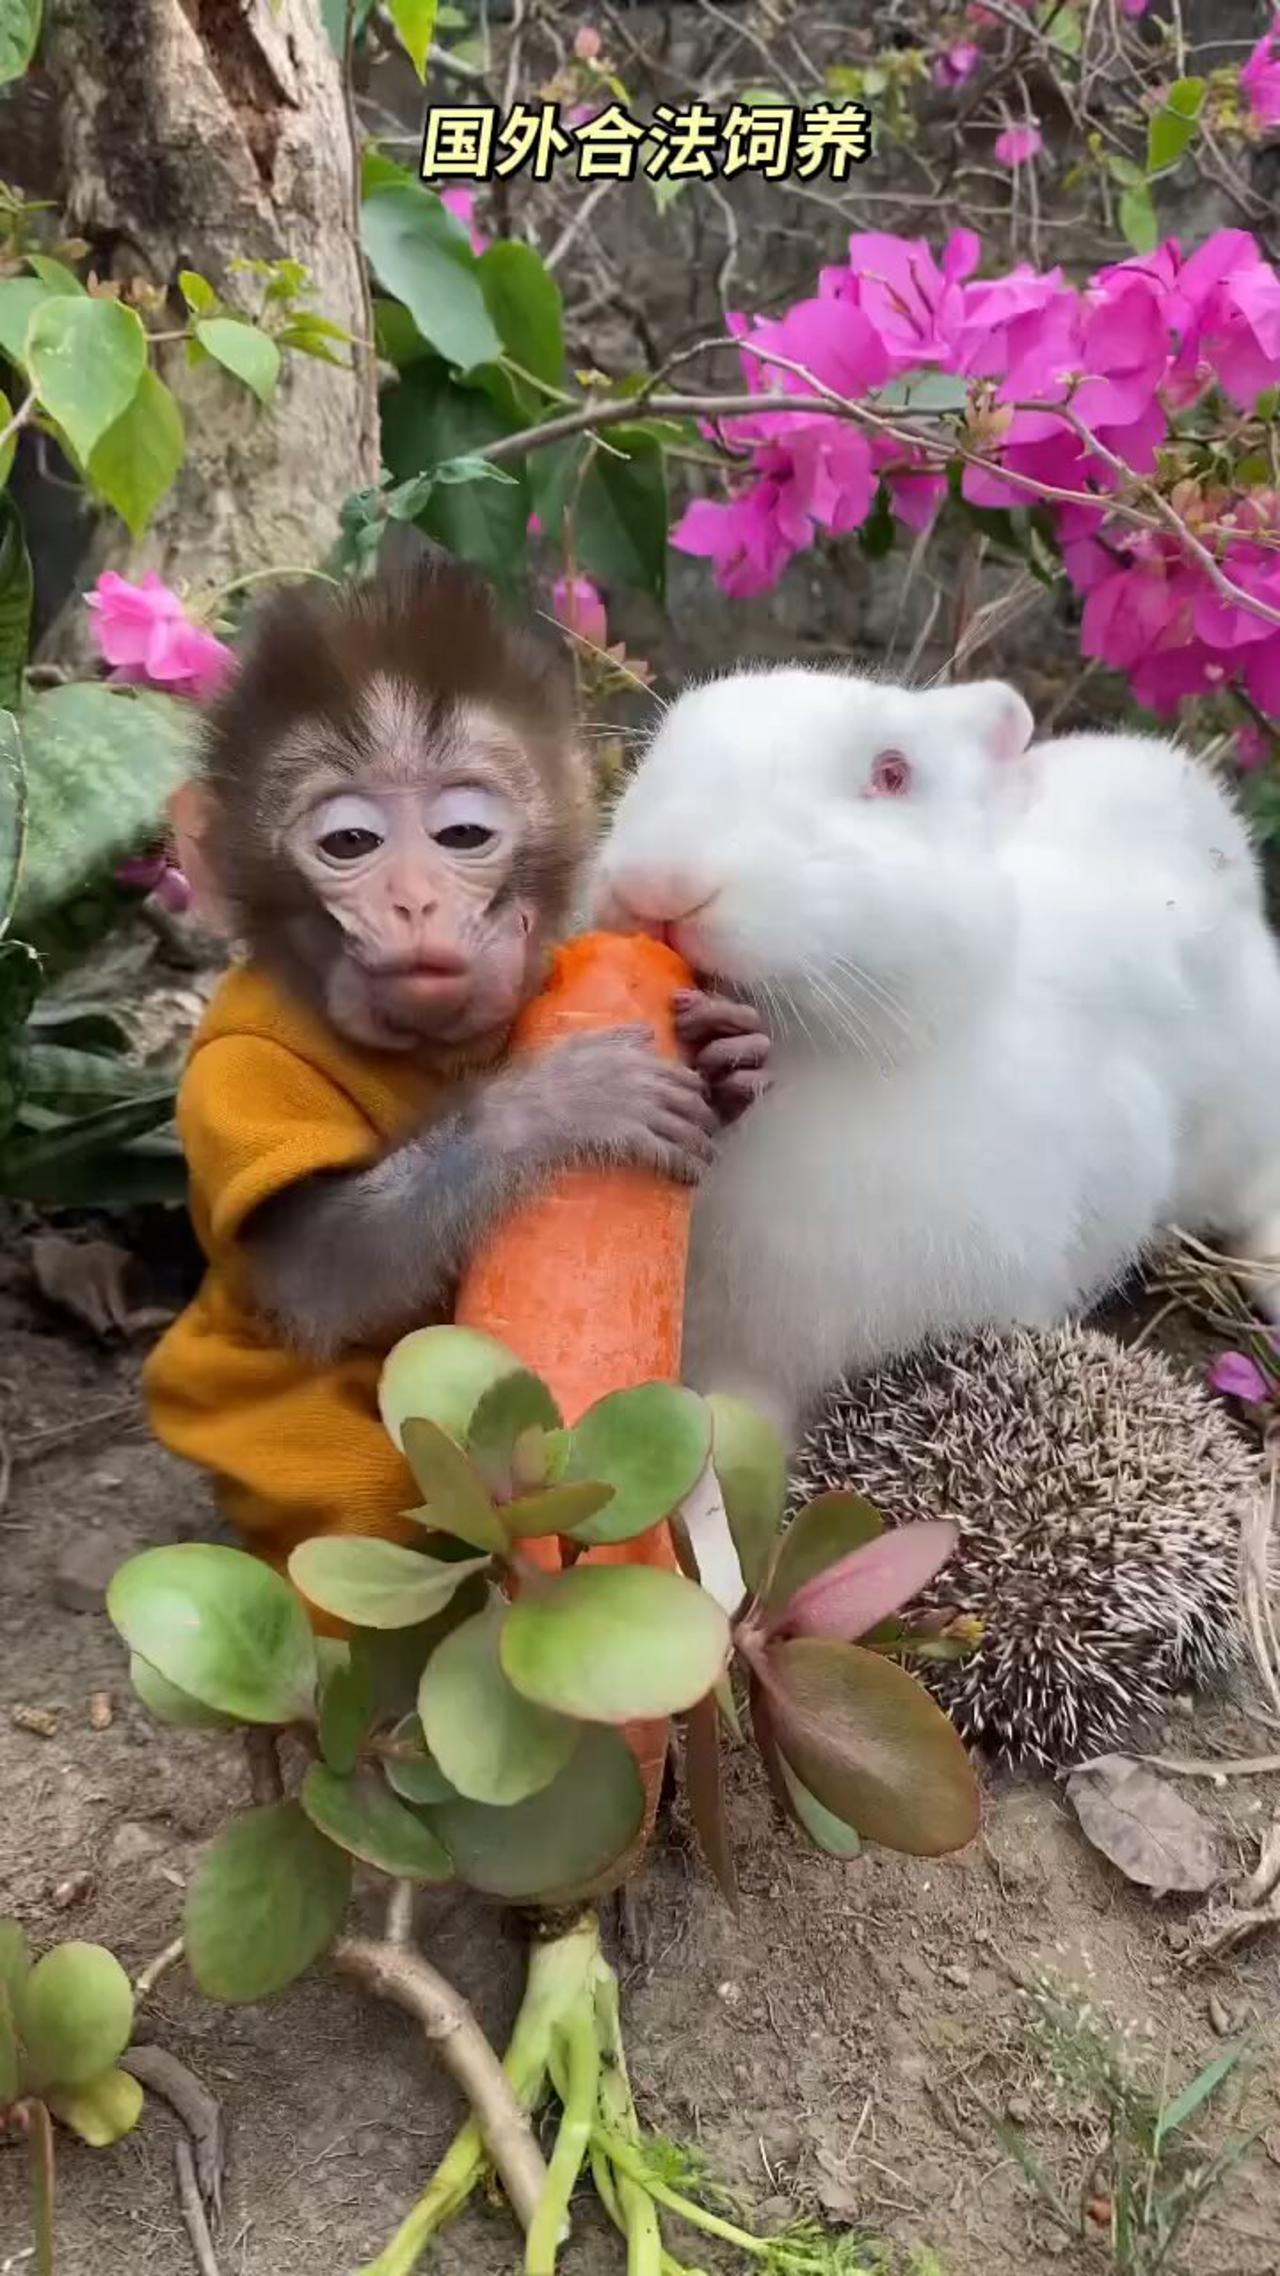 so cute animals 💕 rabbit and money little 🔥 #animal